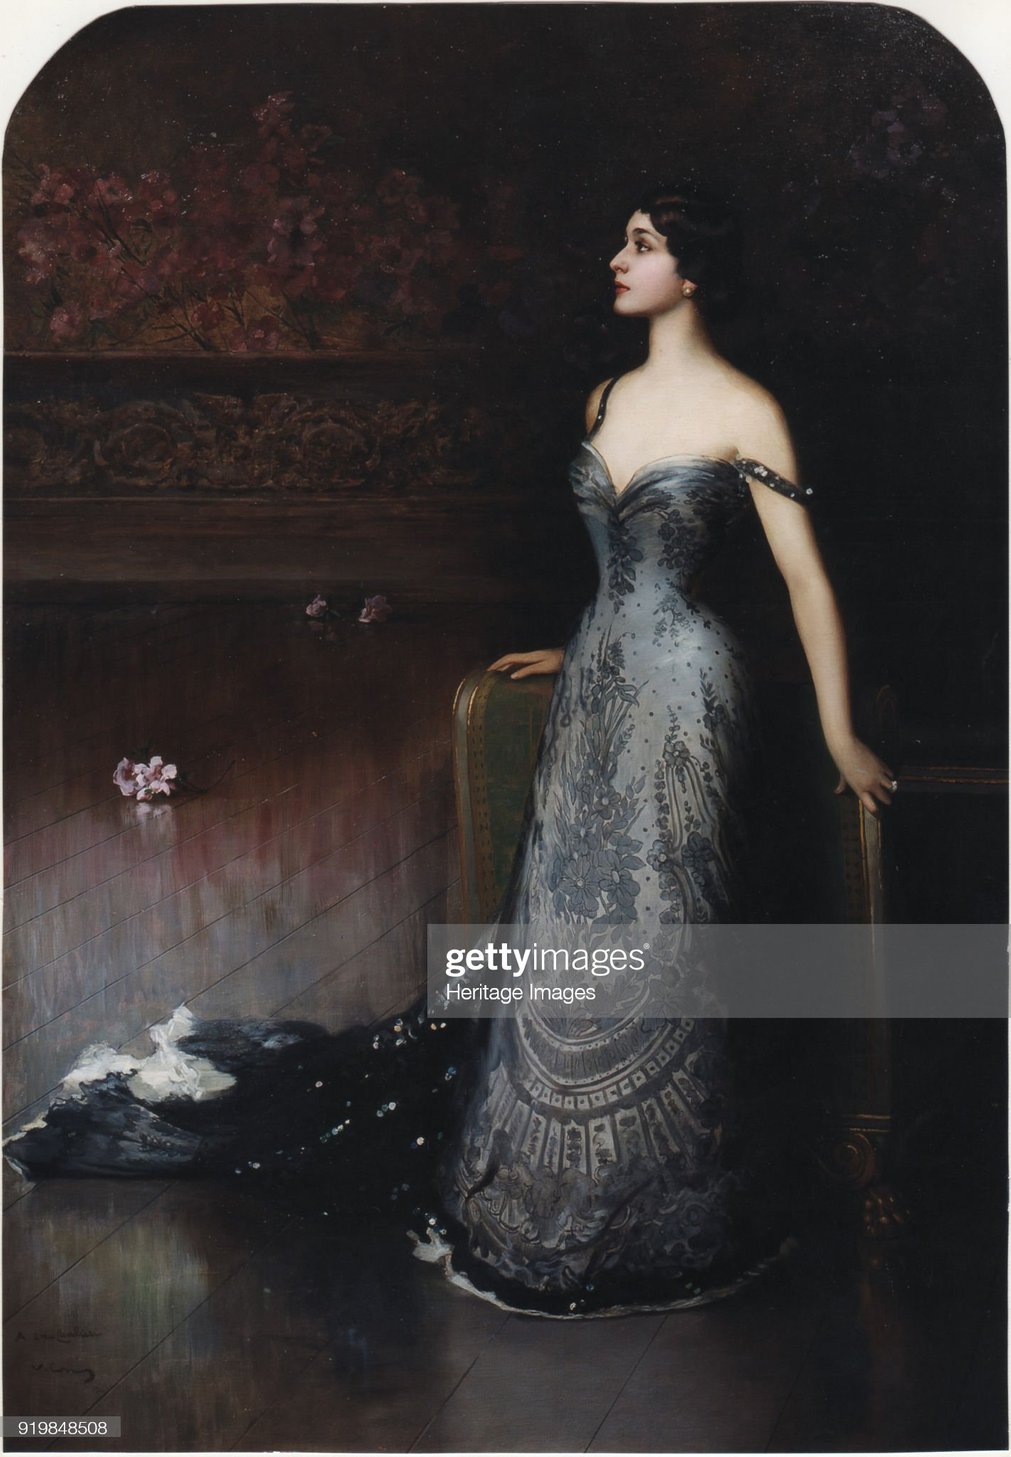 Portrait Of The Opera Singer Lina Cavalieri (1874-1944) : News Photo